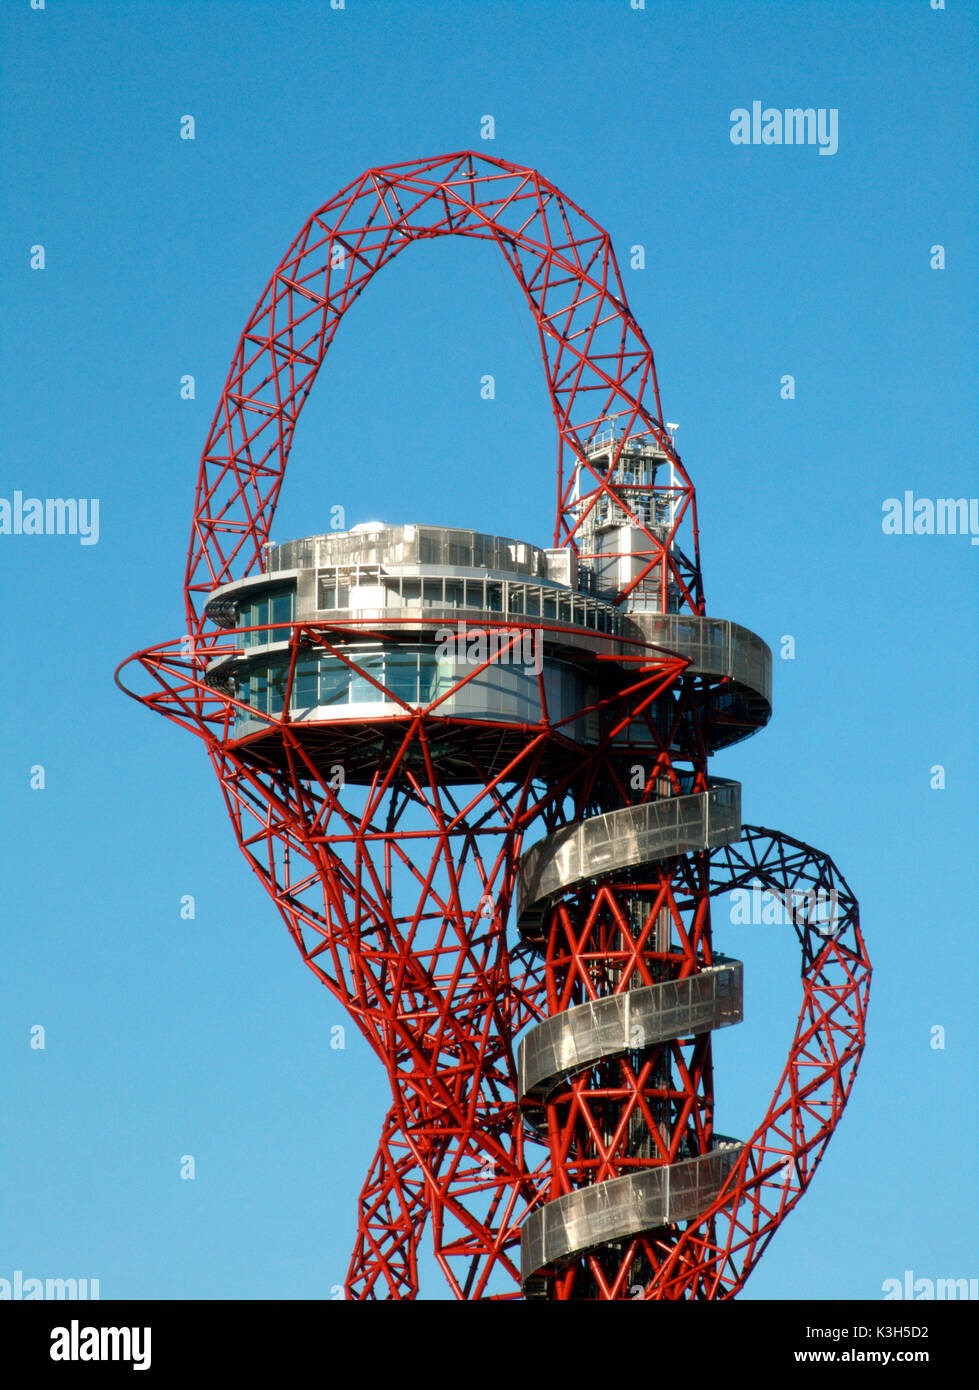 Orbit, Olympic Park, Stratford, London Stock Photo